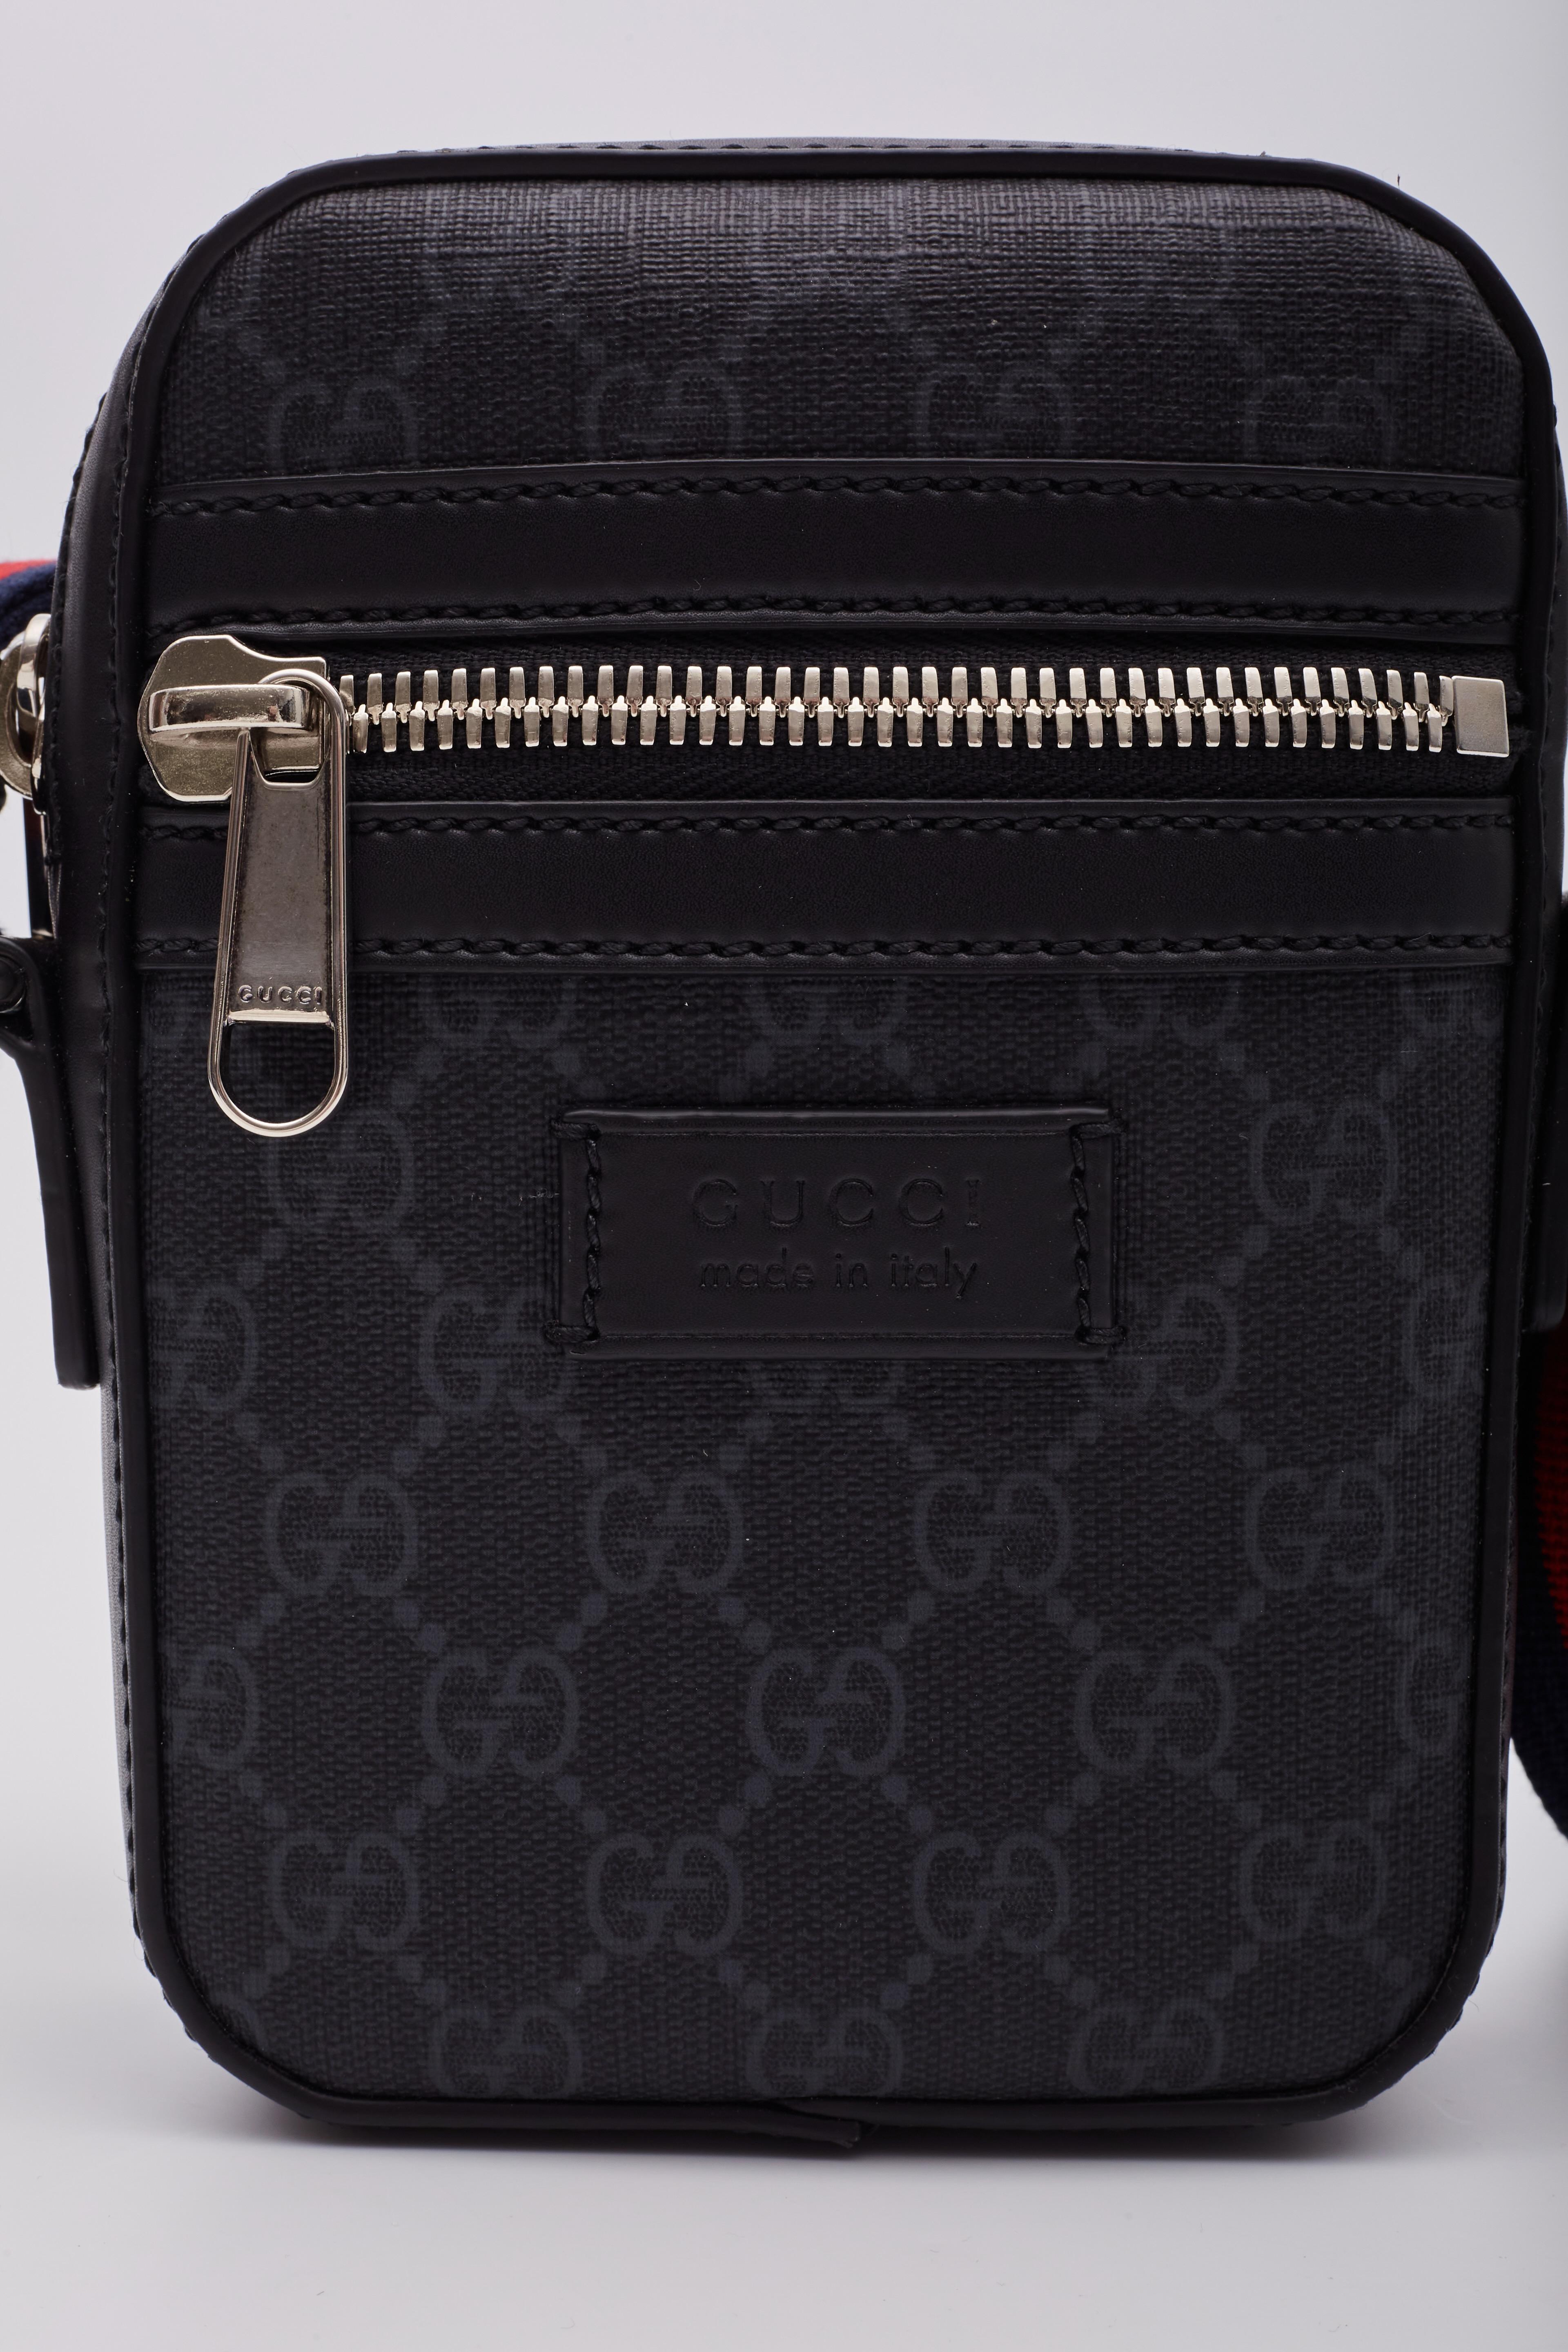 Gucci GG Supreme Monogram Web Messenger Bag Black For Sale 2